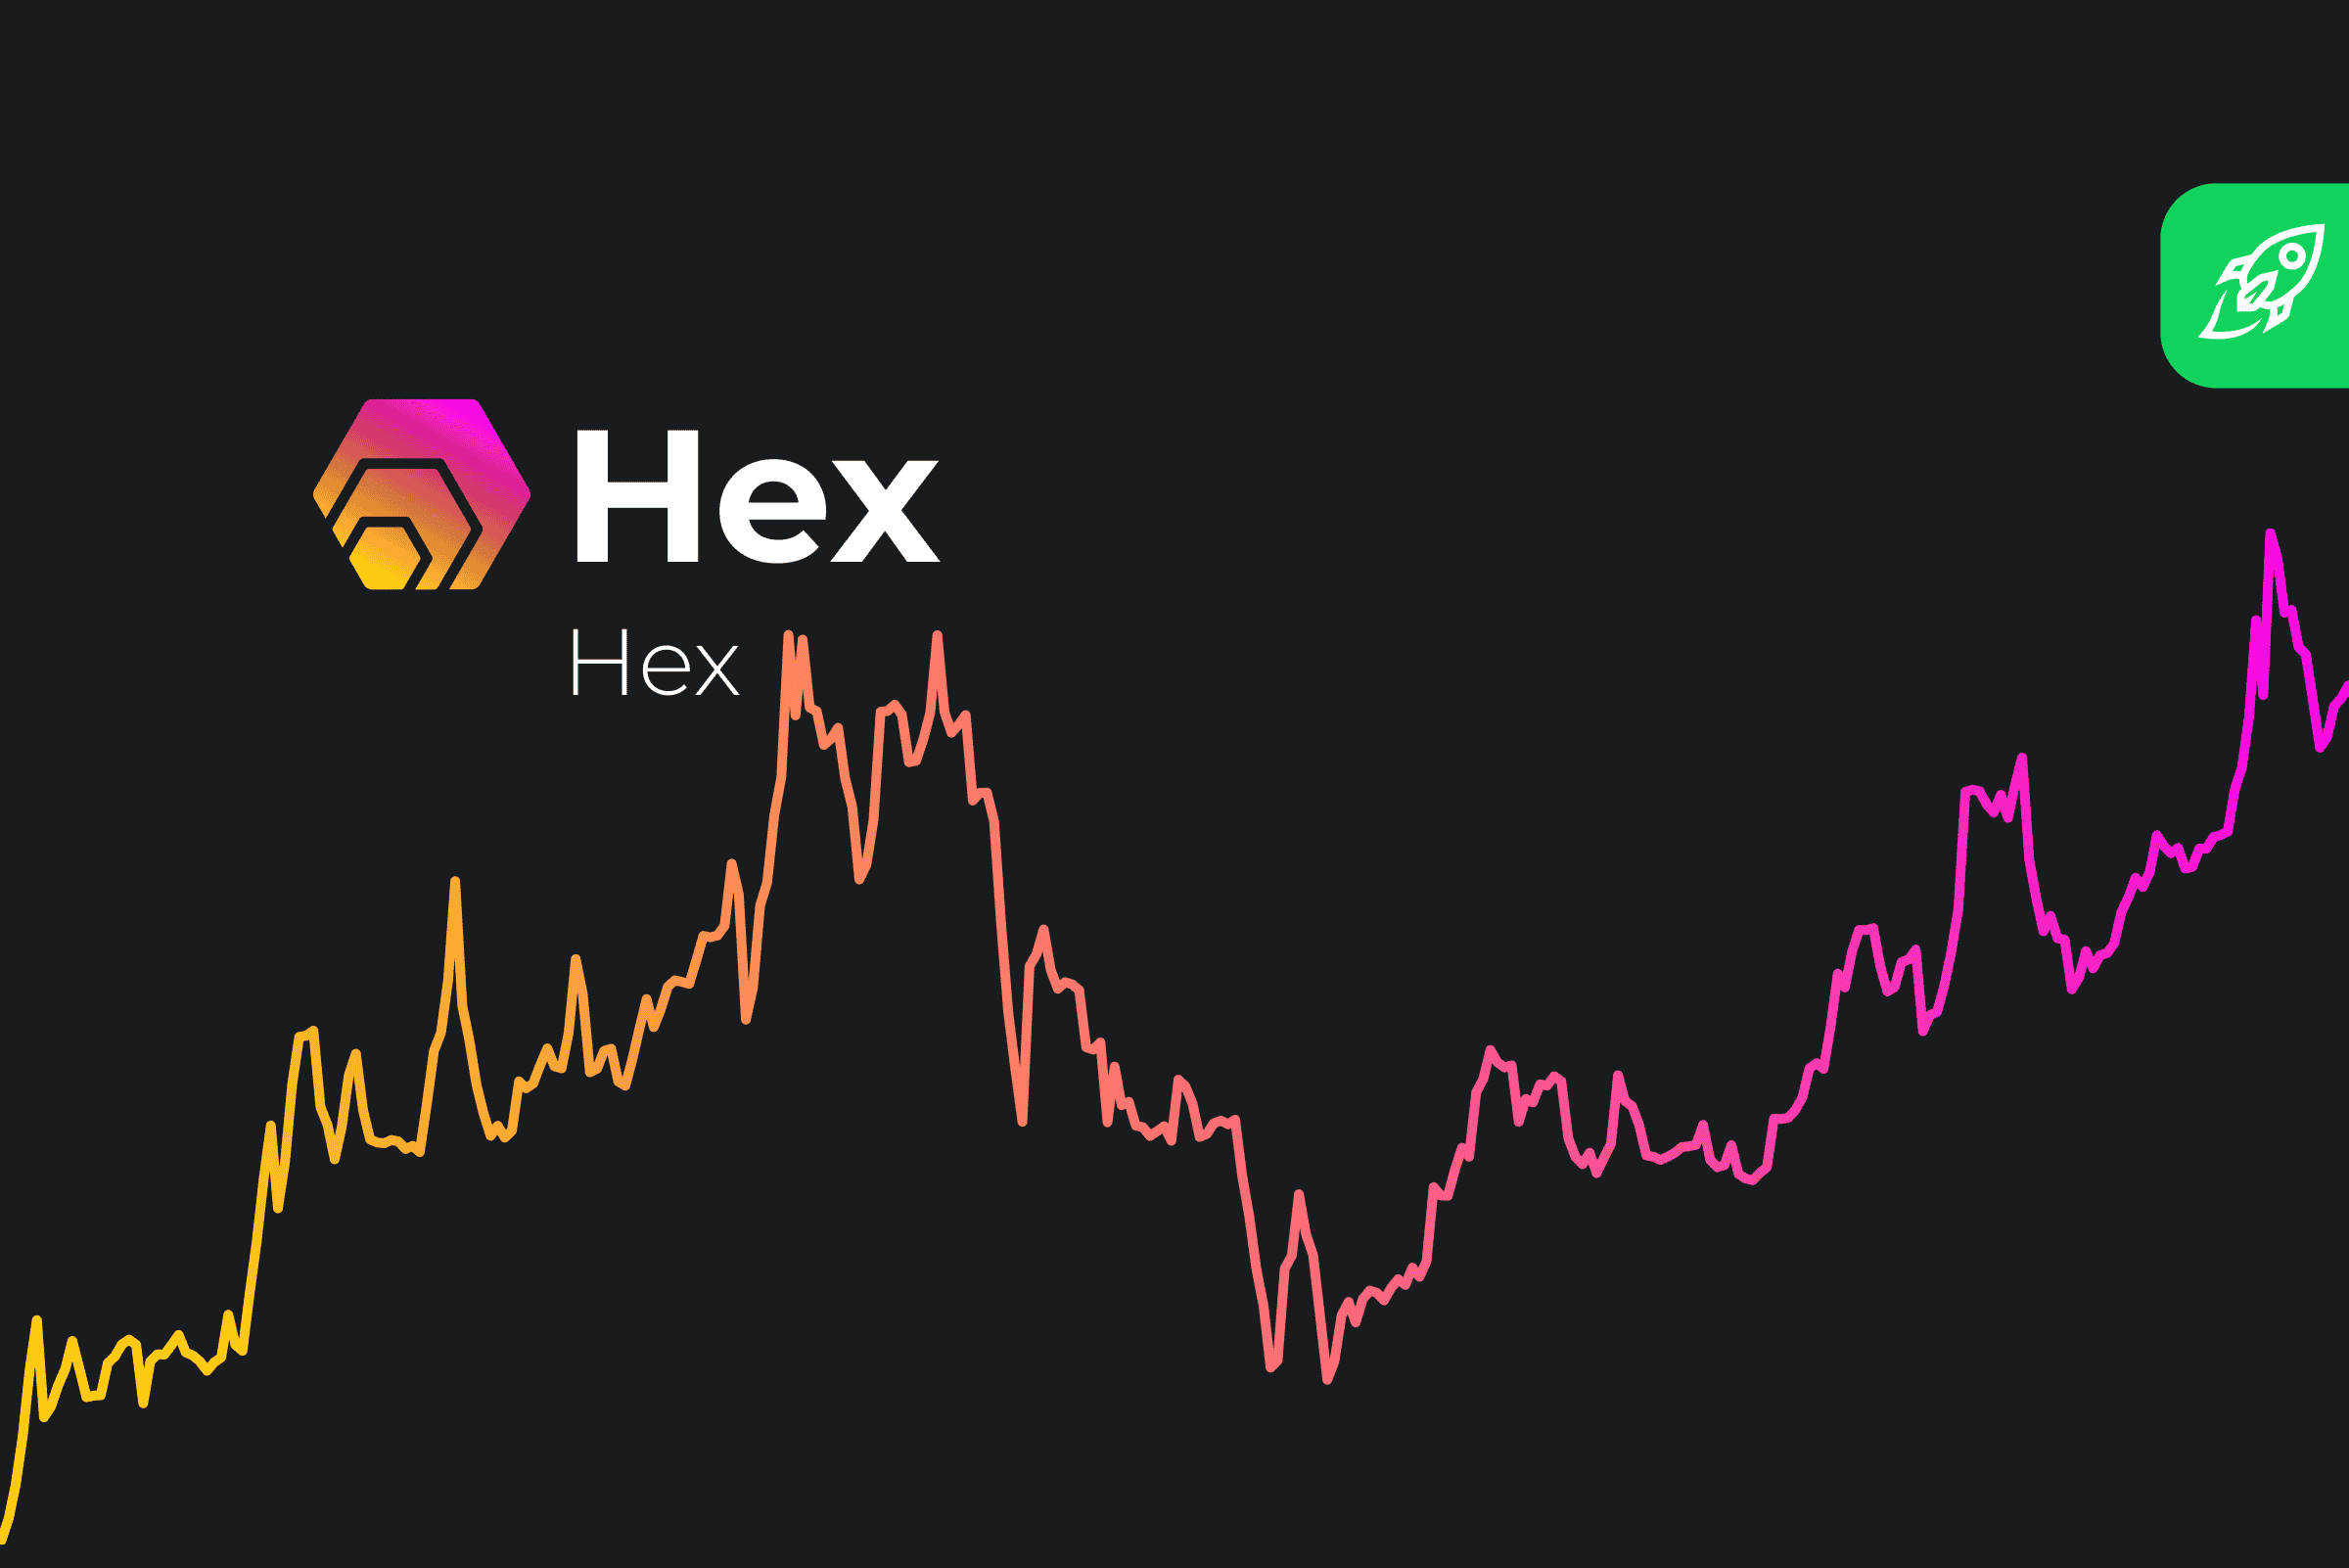 HEX USD (HEX-USD) Price, Value, News & History - Yahoo Finance